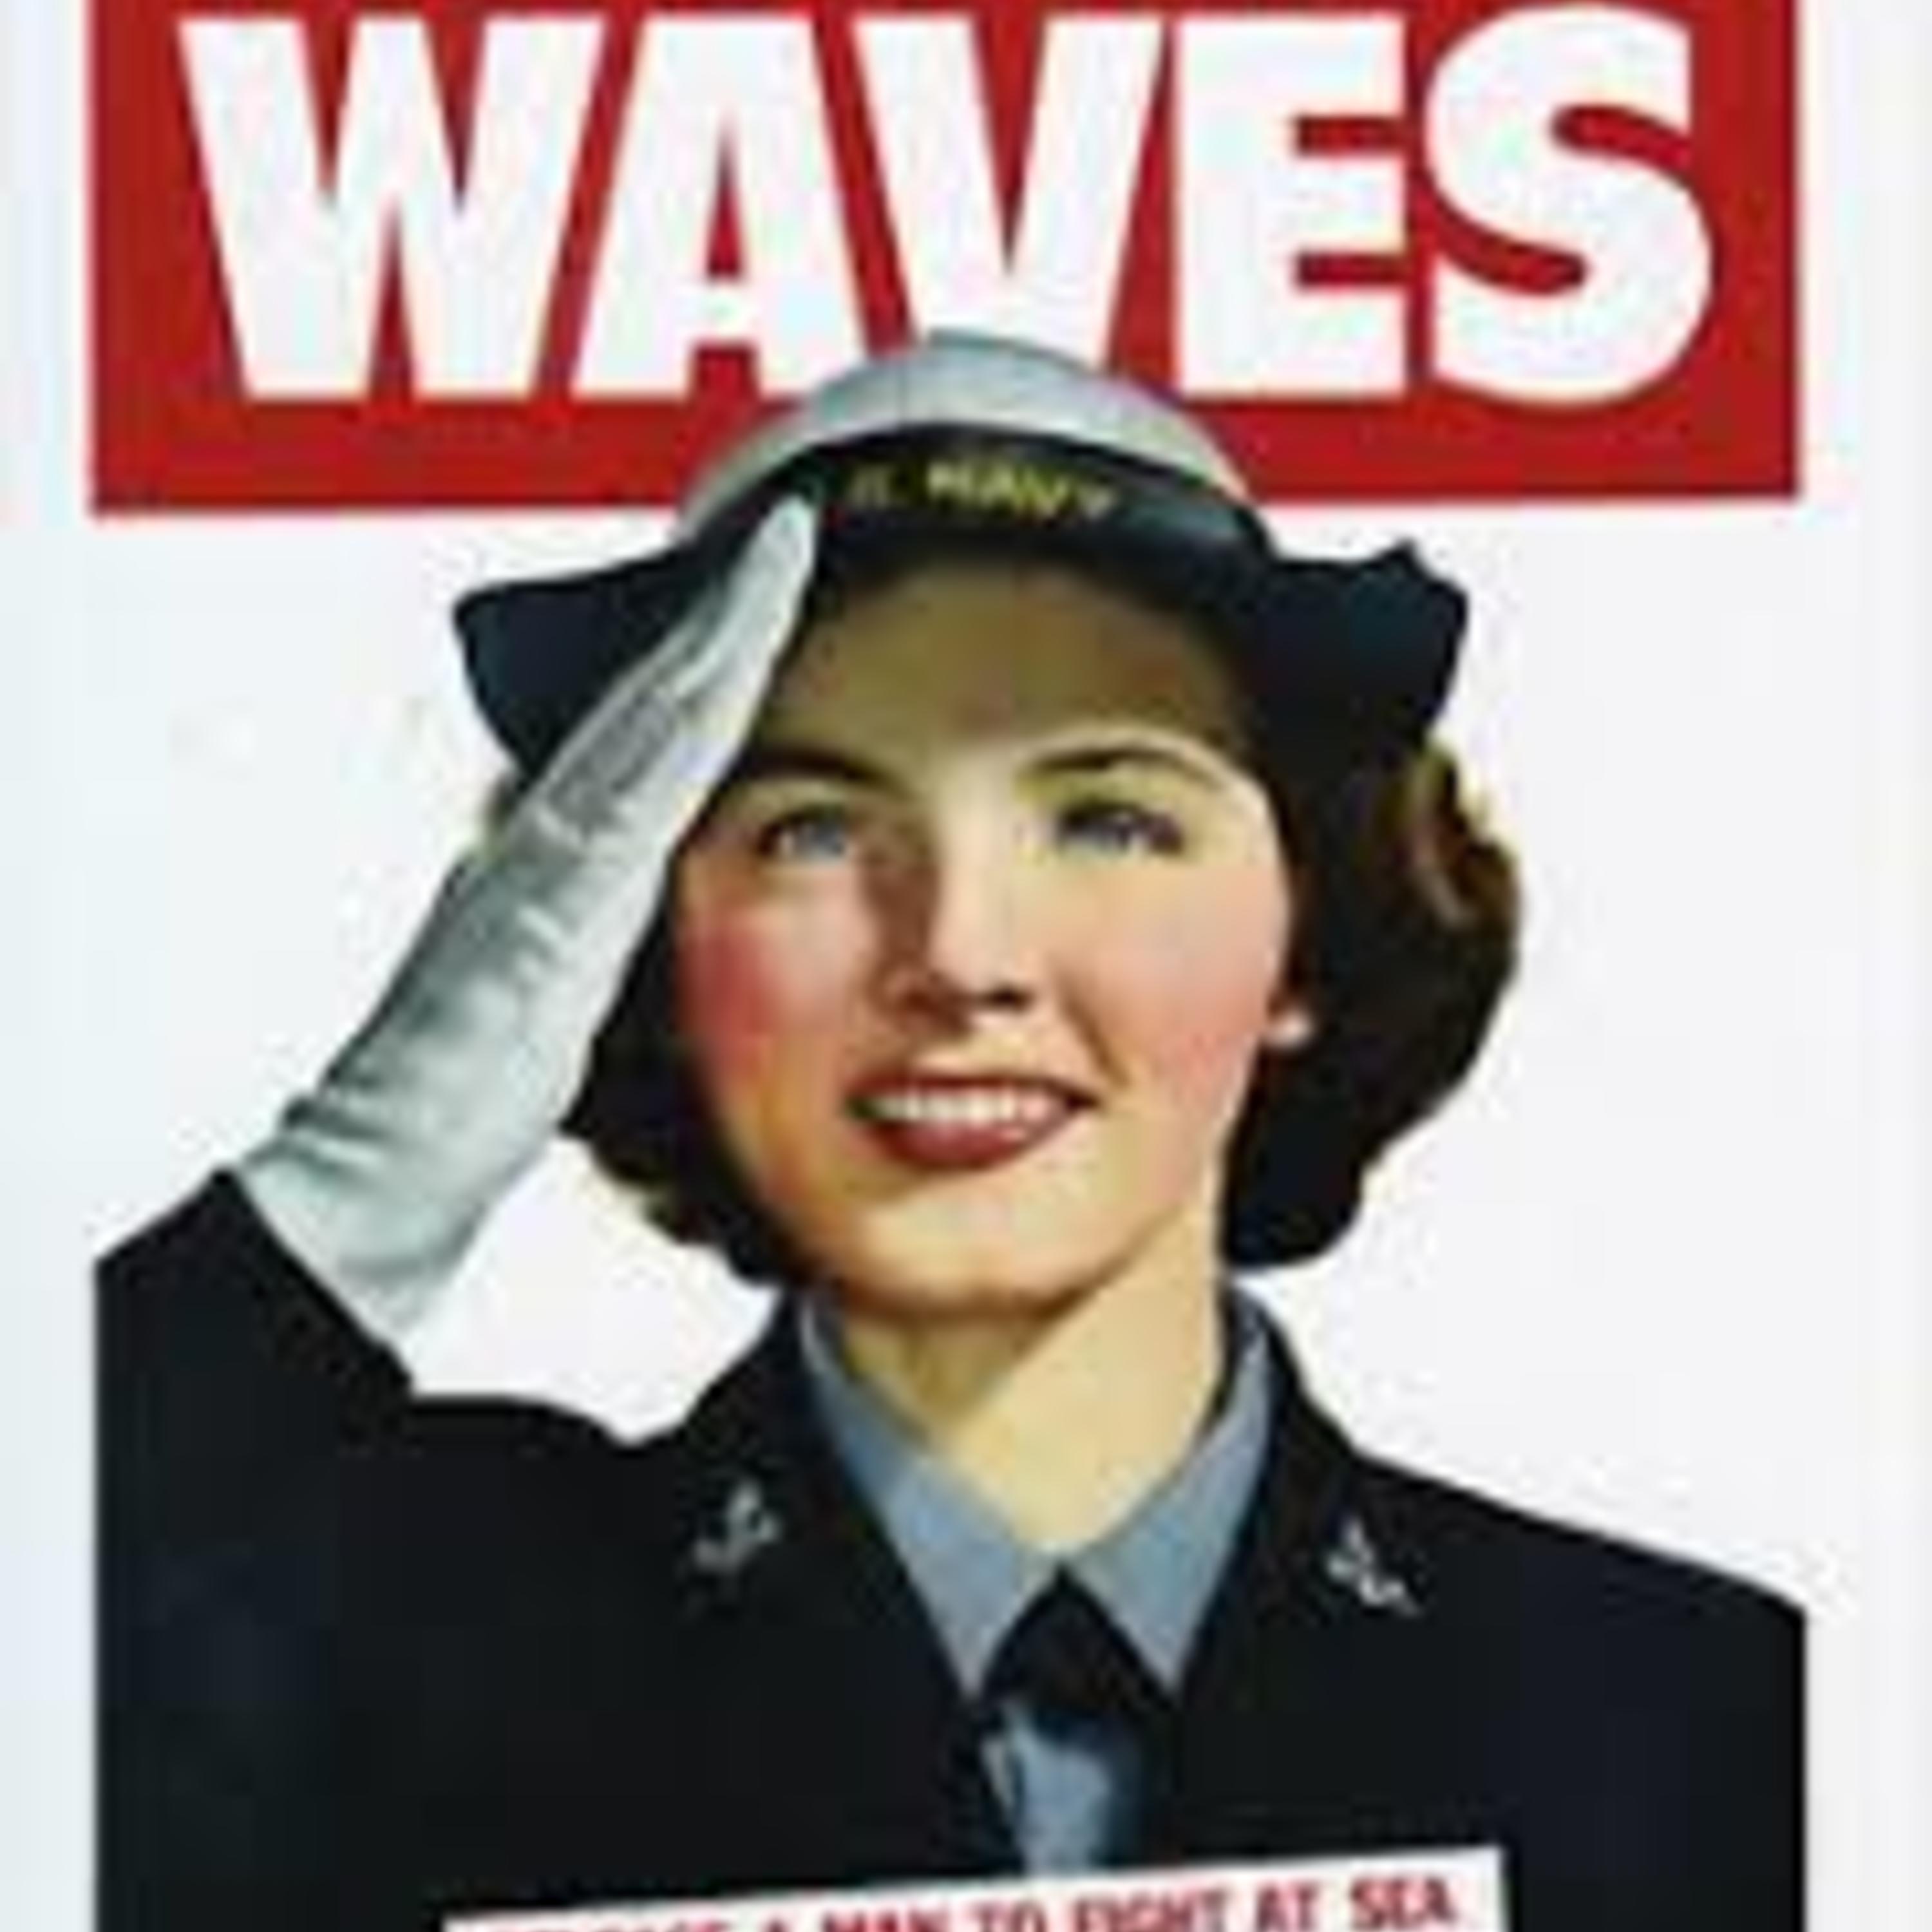 WAVES recruitment poster 2.jpg